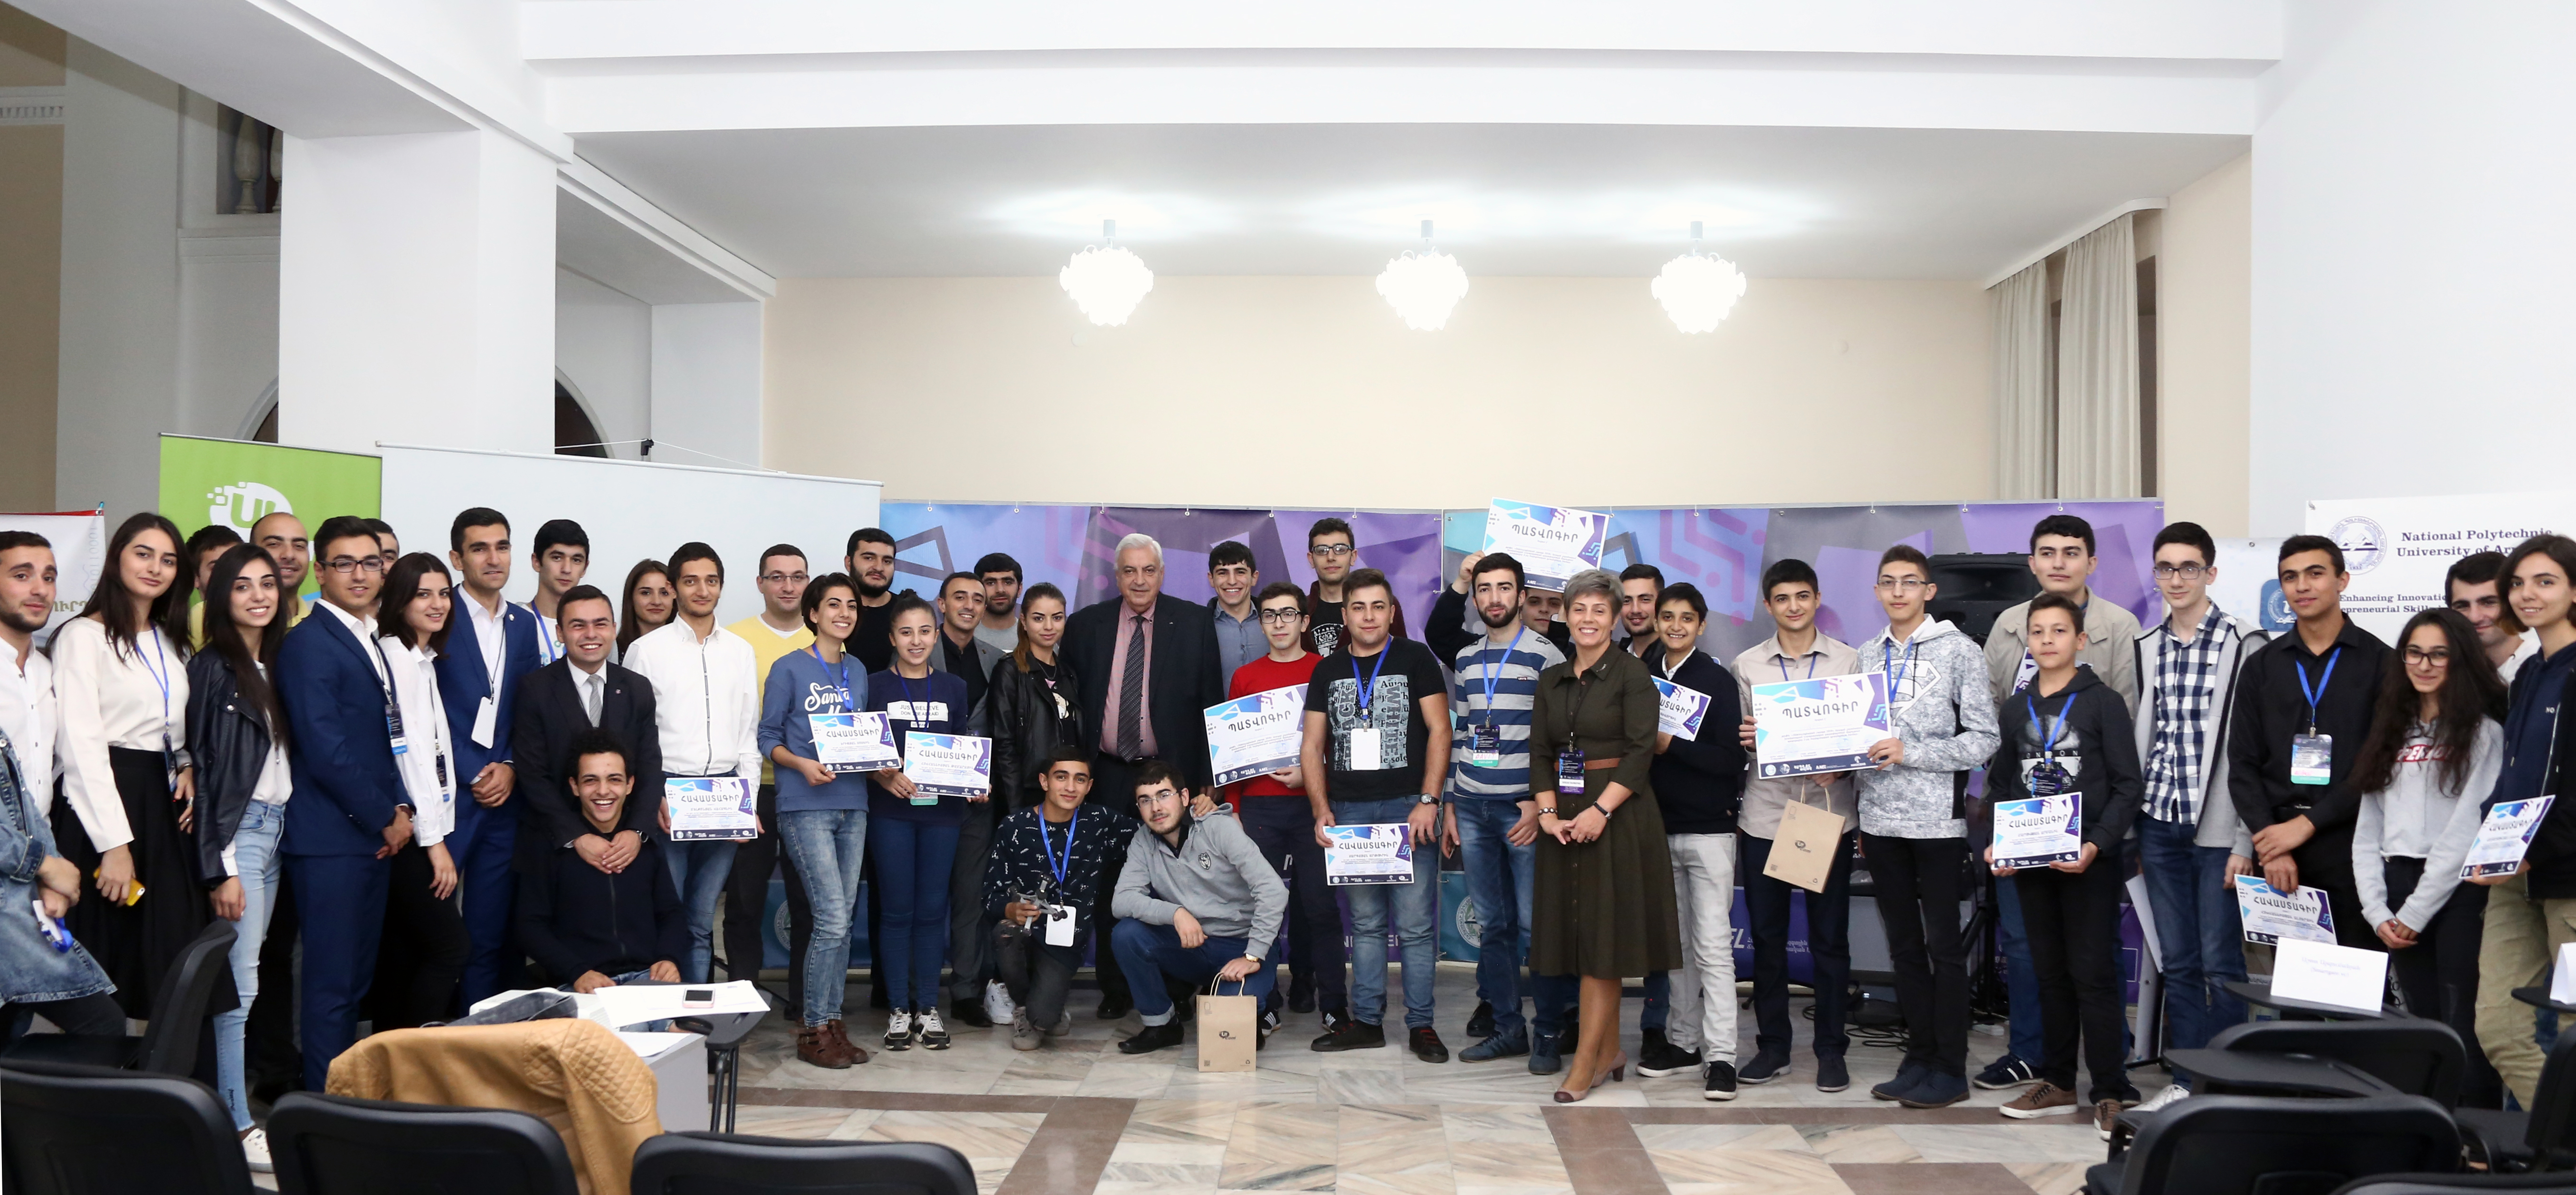 Ucom-sponsored ‘Technoweek’ Held at the NPUA, Winning Team Known